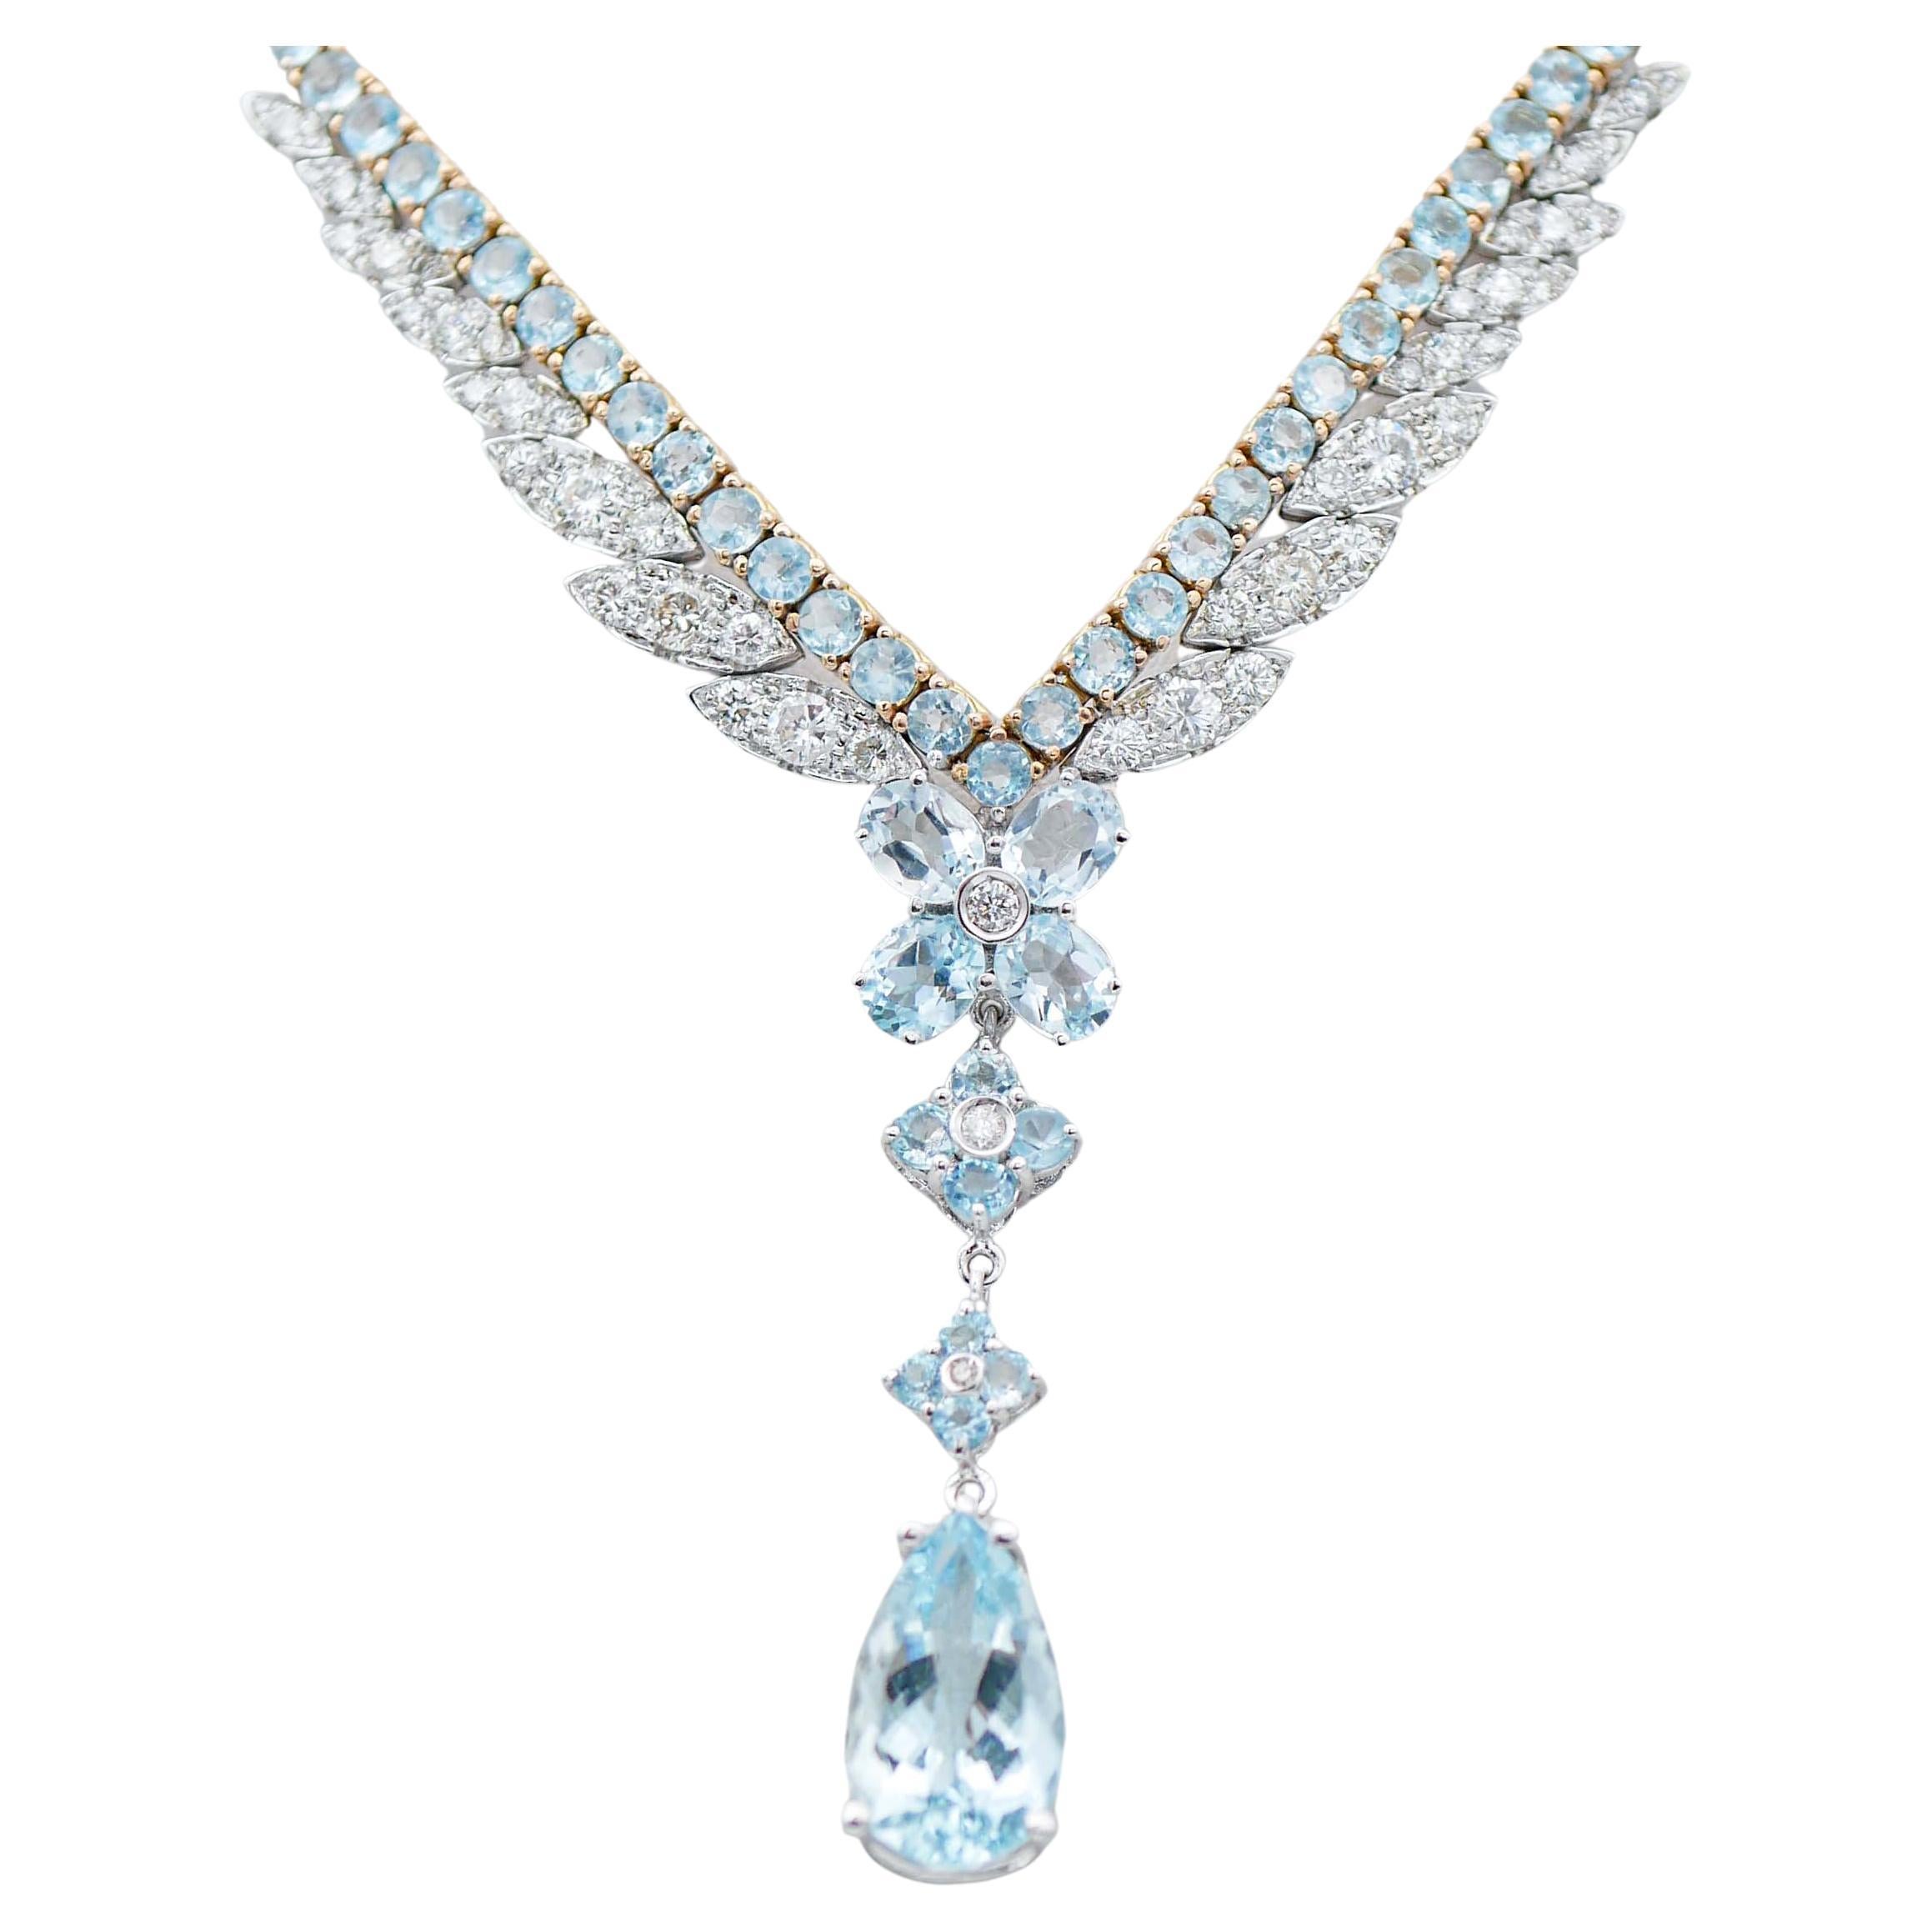 Aquamarine, Diamonds, 14 Karat White and Rose Gold Tennis Necklace